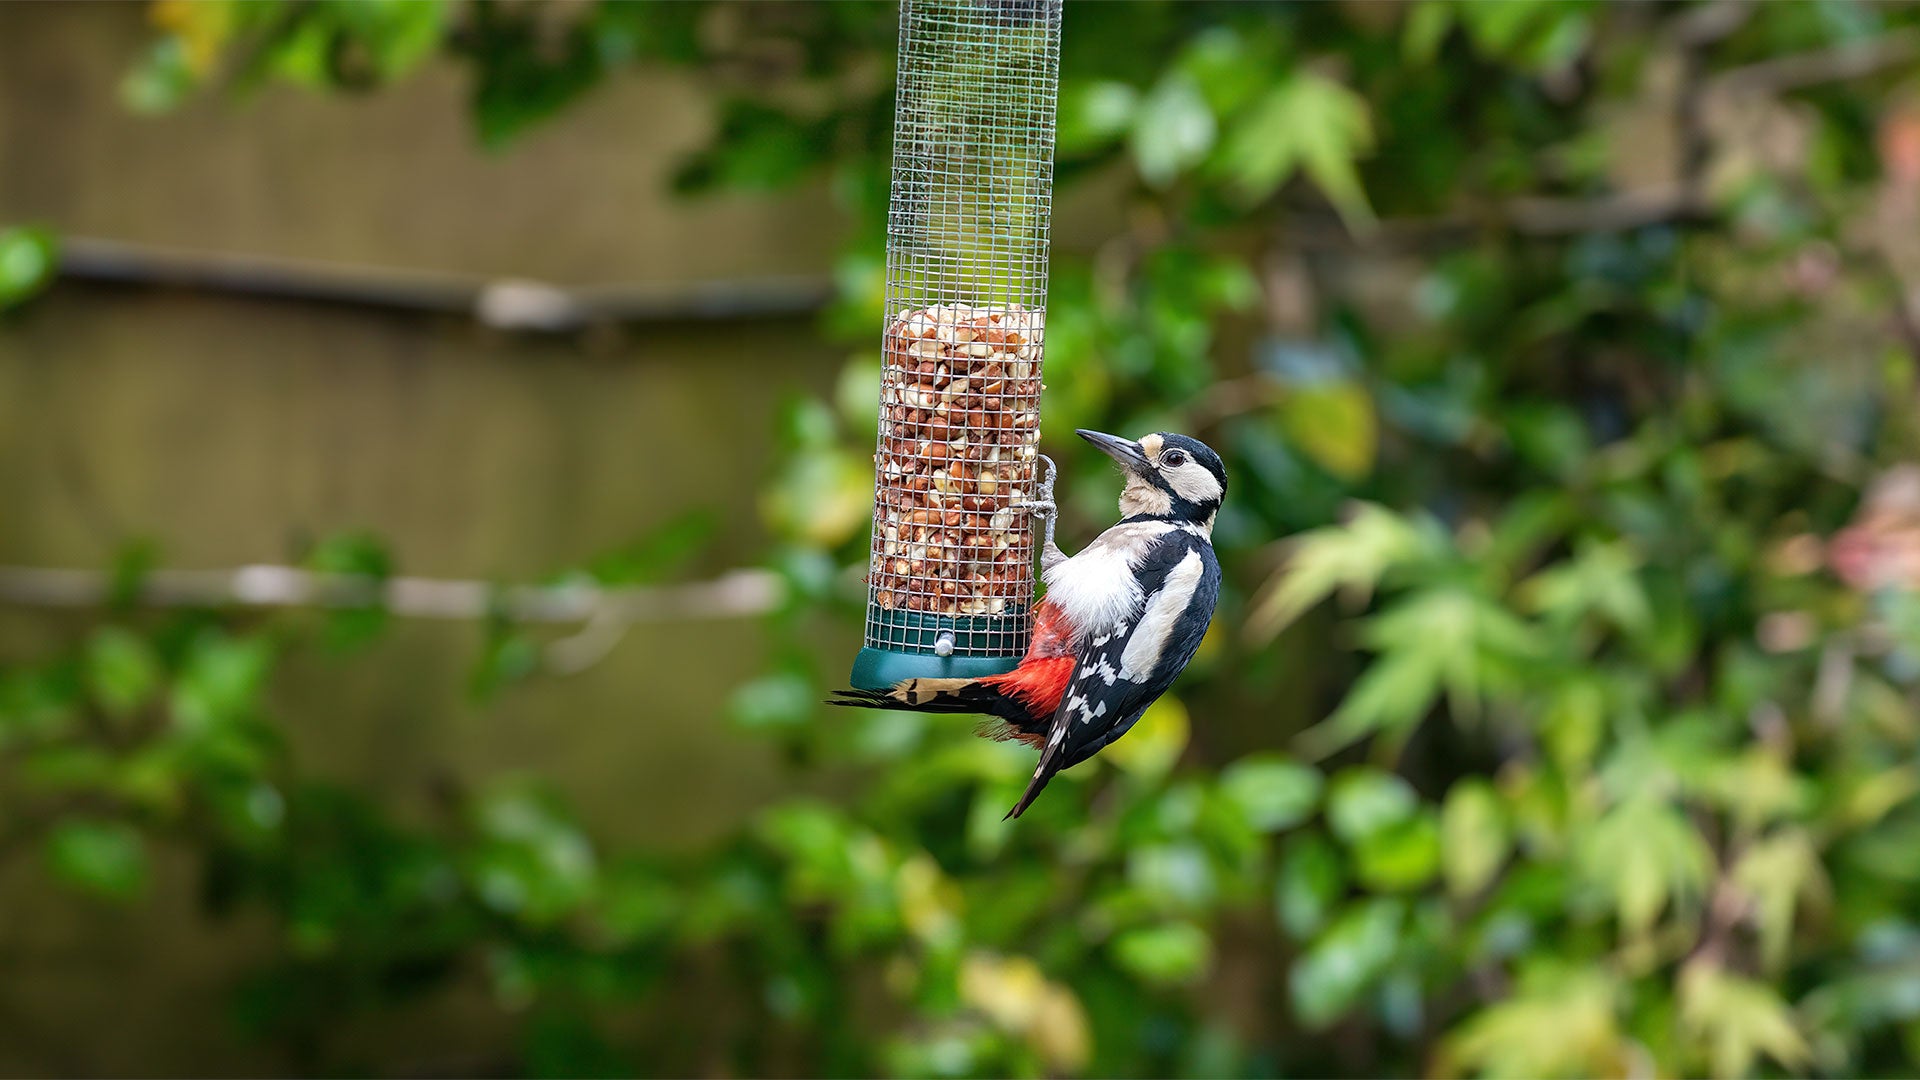 Spotted woodpecker feeding from mesh peanut feeder